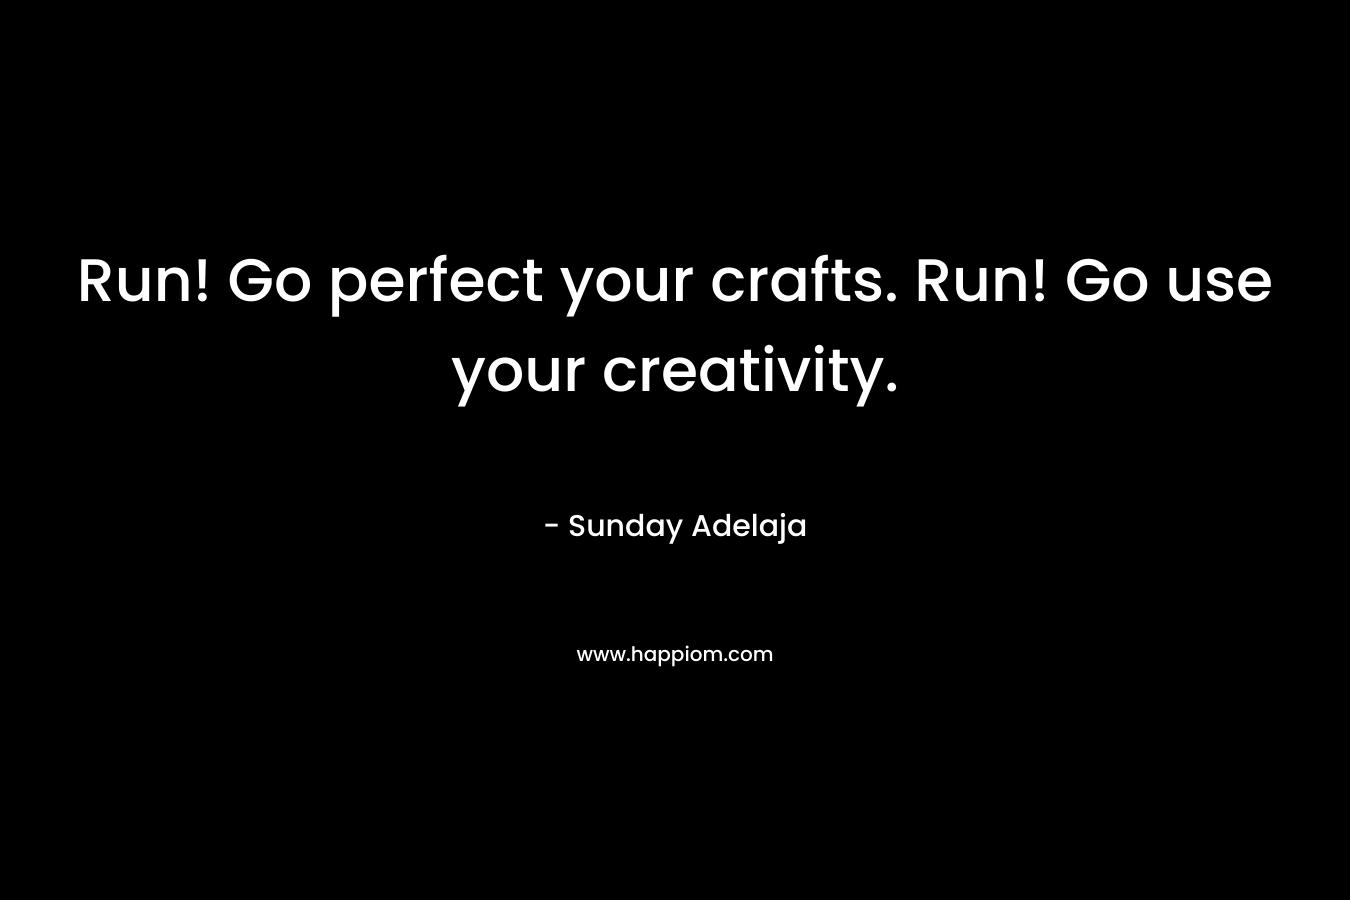 Run! Go perfect your crafts. Run! Go use your creativity.